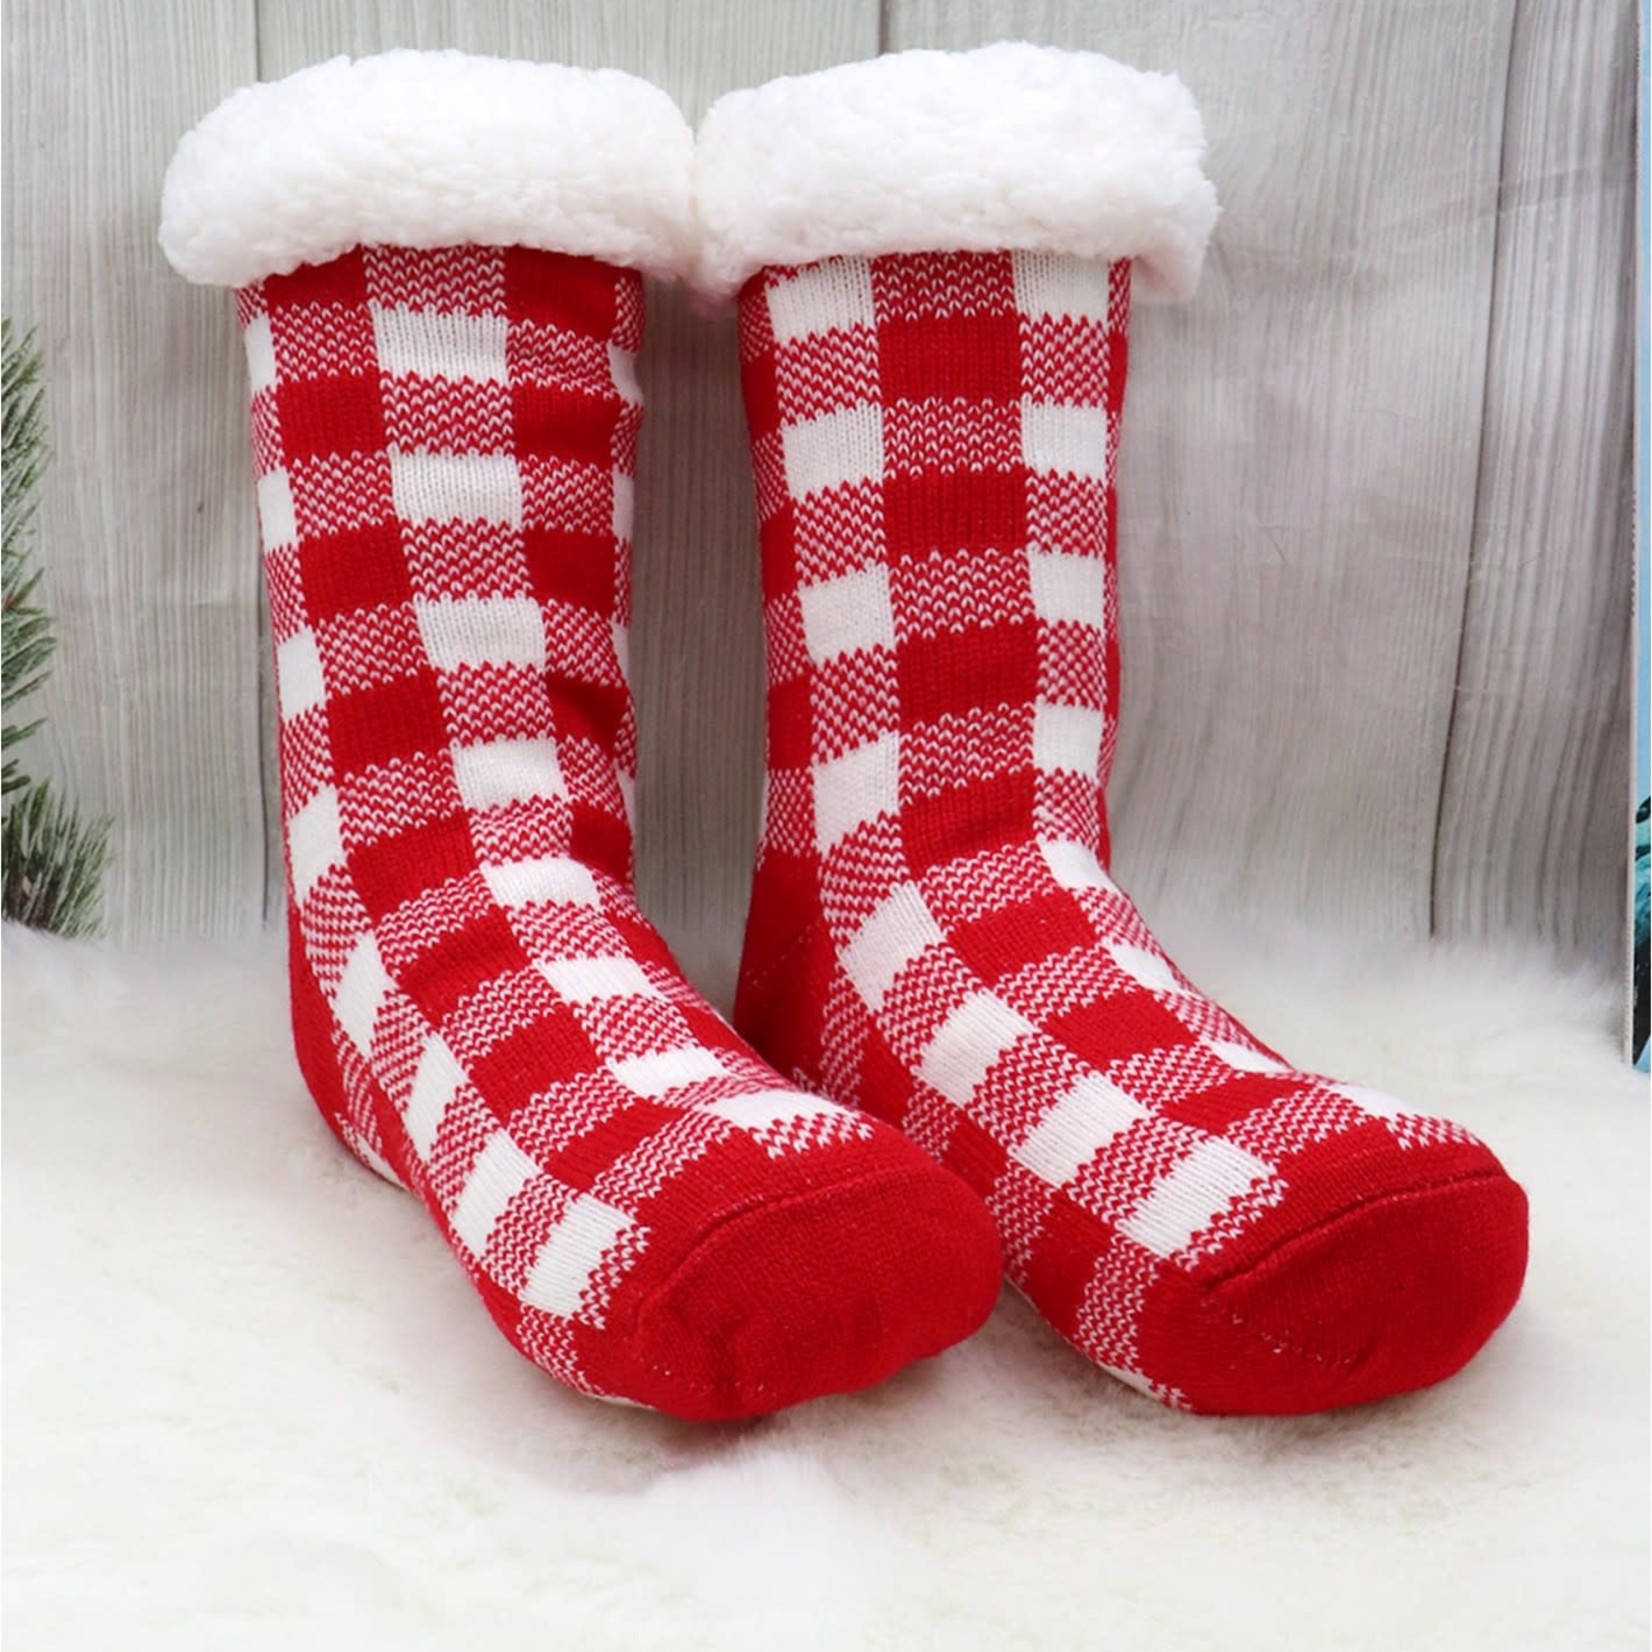 https://cdn.shoplightspeed.com/shops/636102/files/49478192/1652x1652x1/plaid-indoor-anti-skid-slipper-socks-red-white.jpg